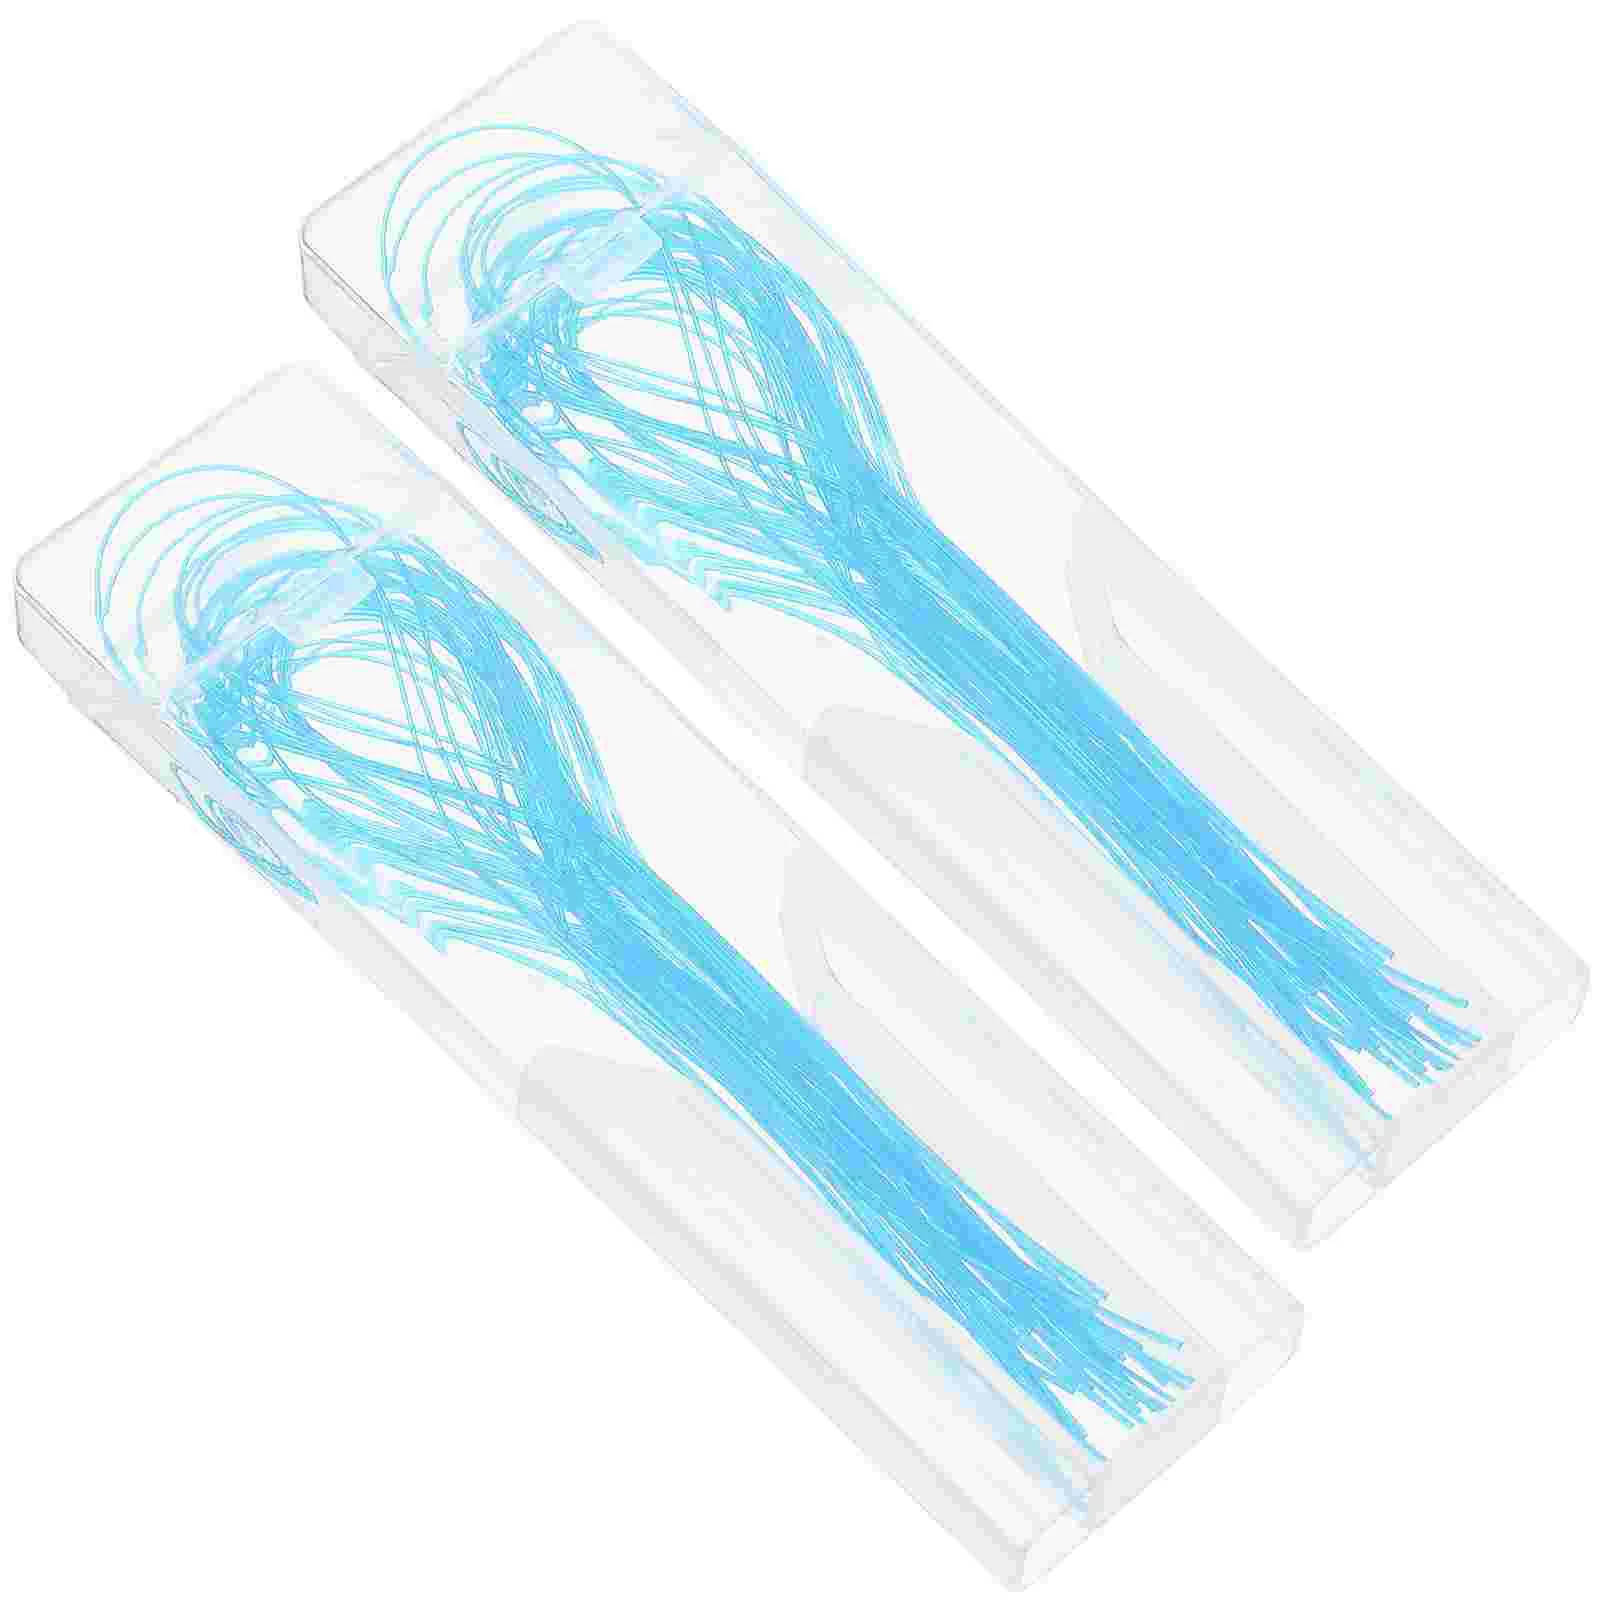 

2 Boxes Dental Floss Threading Flossers Threaders Braces Major Cleaning Teeth Nylon Supplies Premium Bridges For